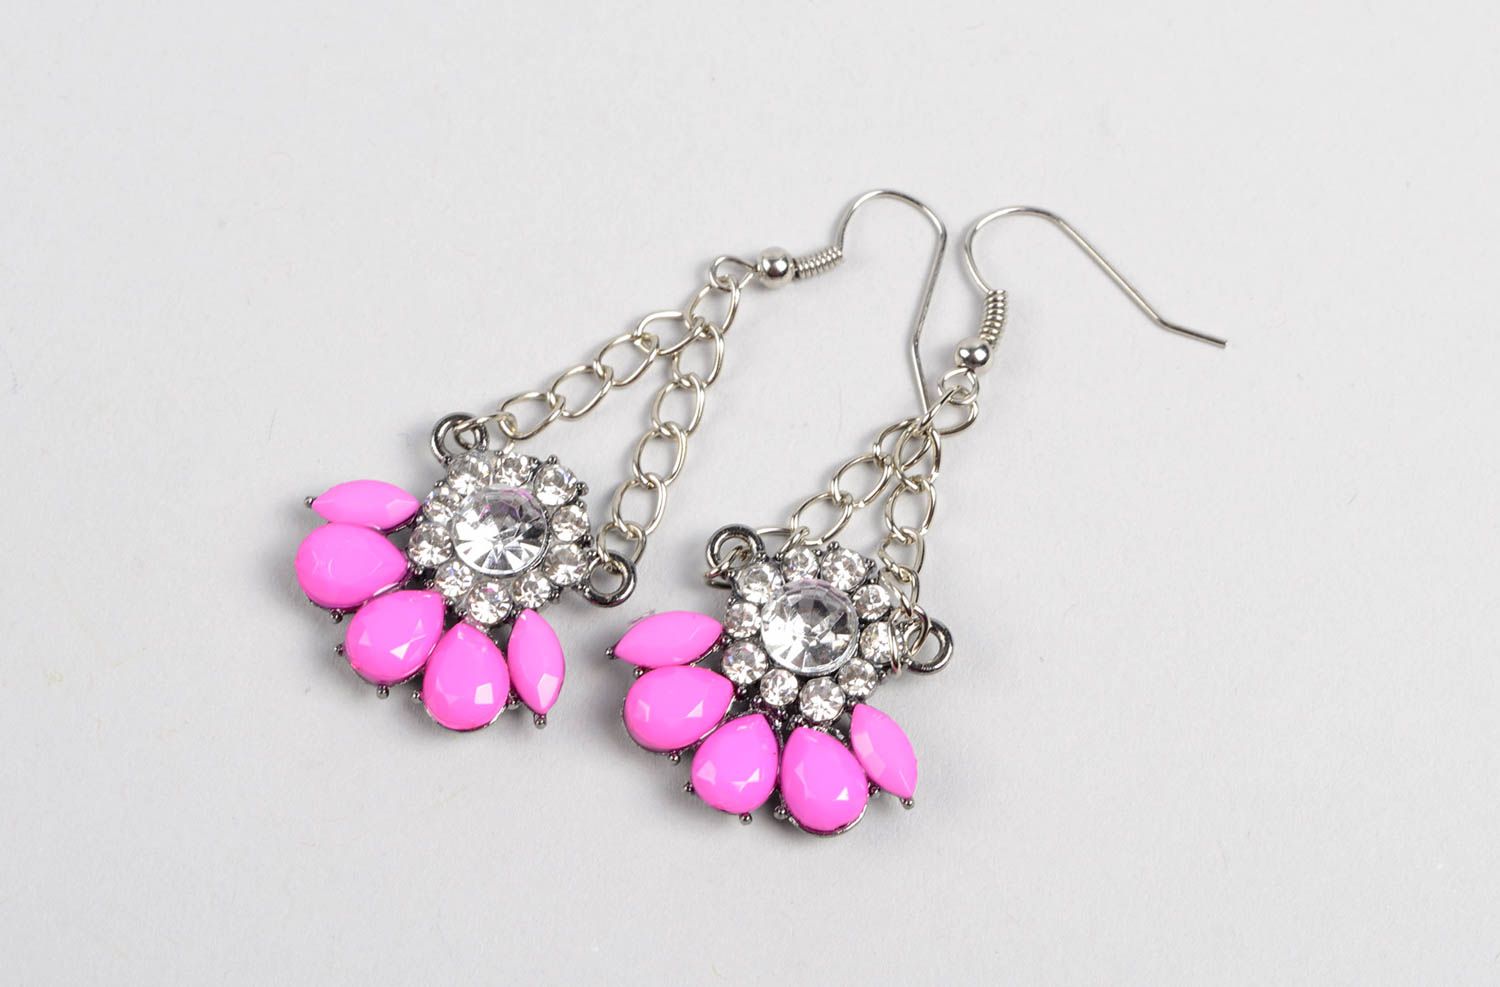 Dangling earrings handmade jewellery fashion earrings designer accessories photo 4